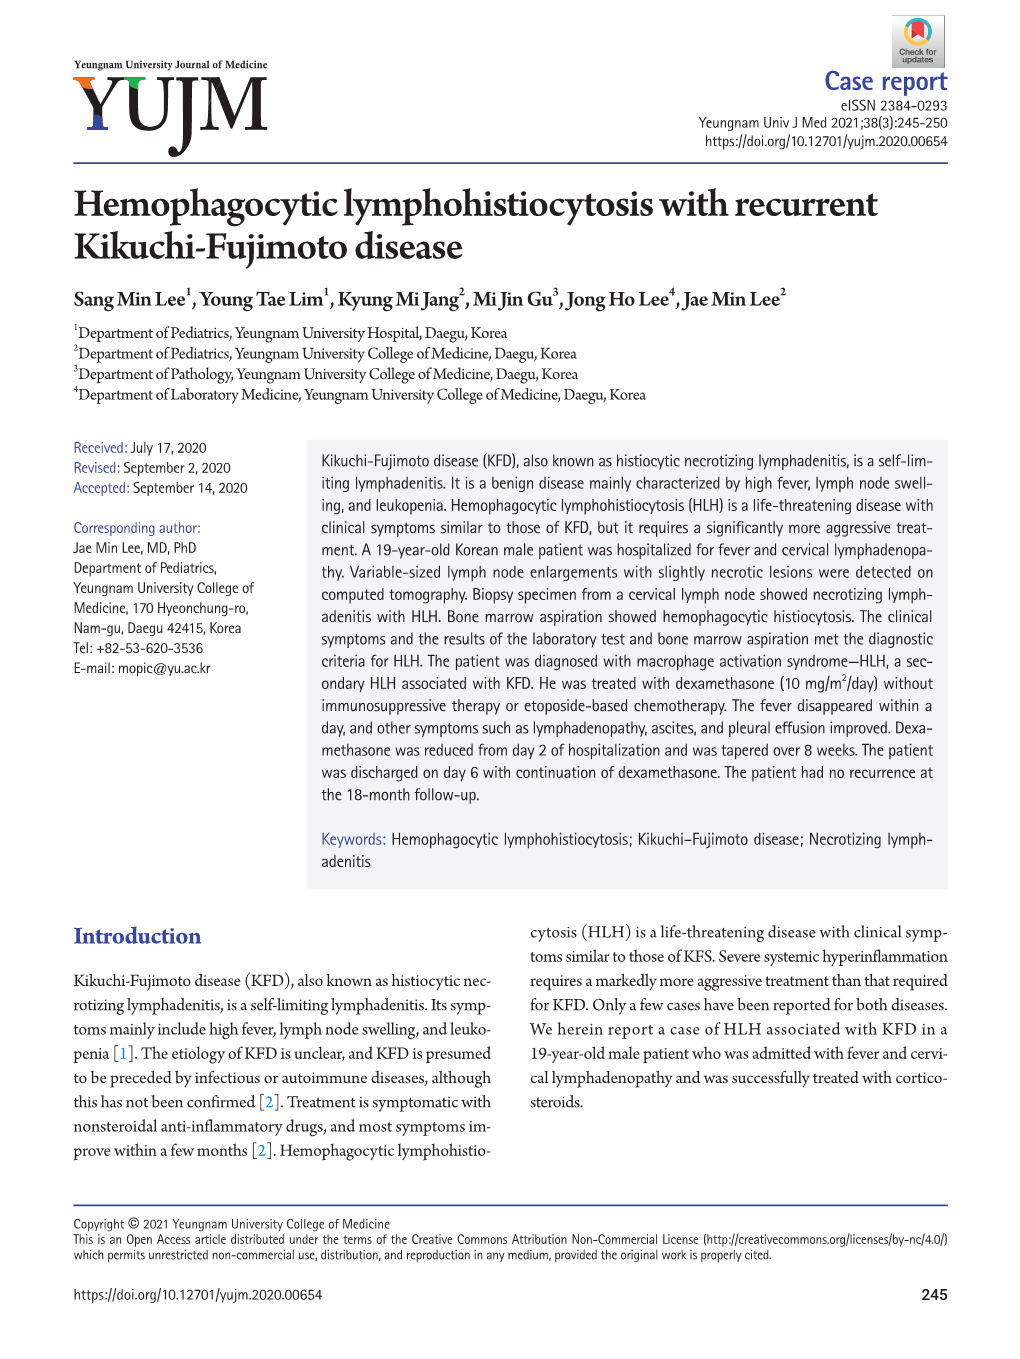 Hemophagocytic Lymphohistiocytosis with Recurrent Kikuchi-Fujimoto